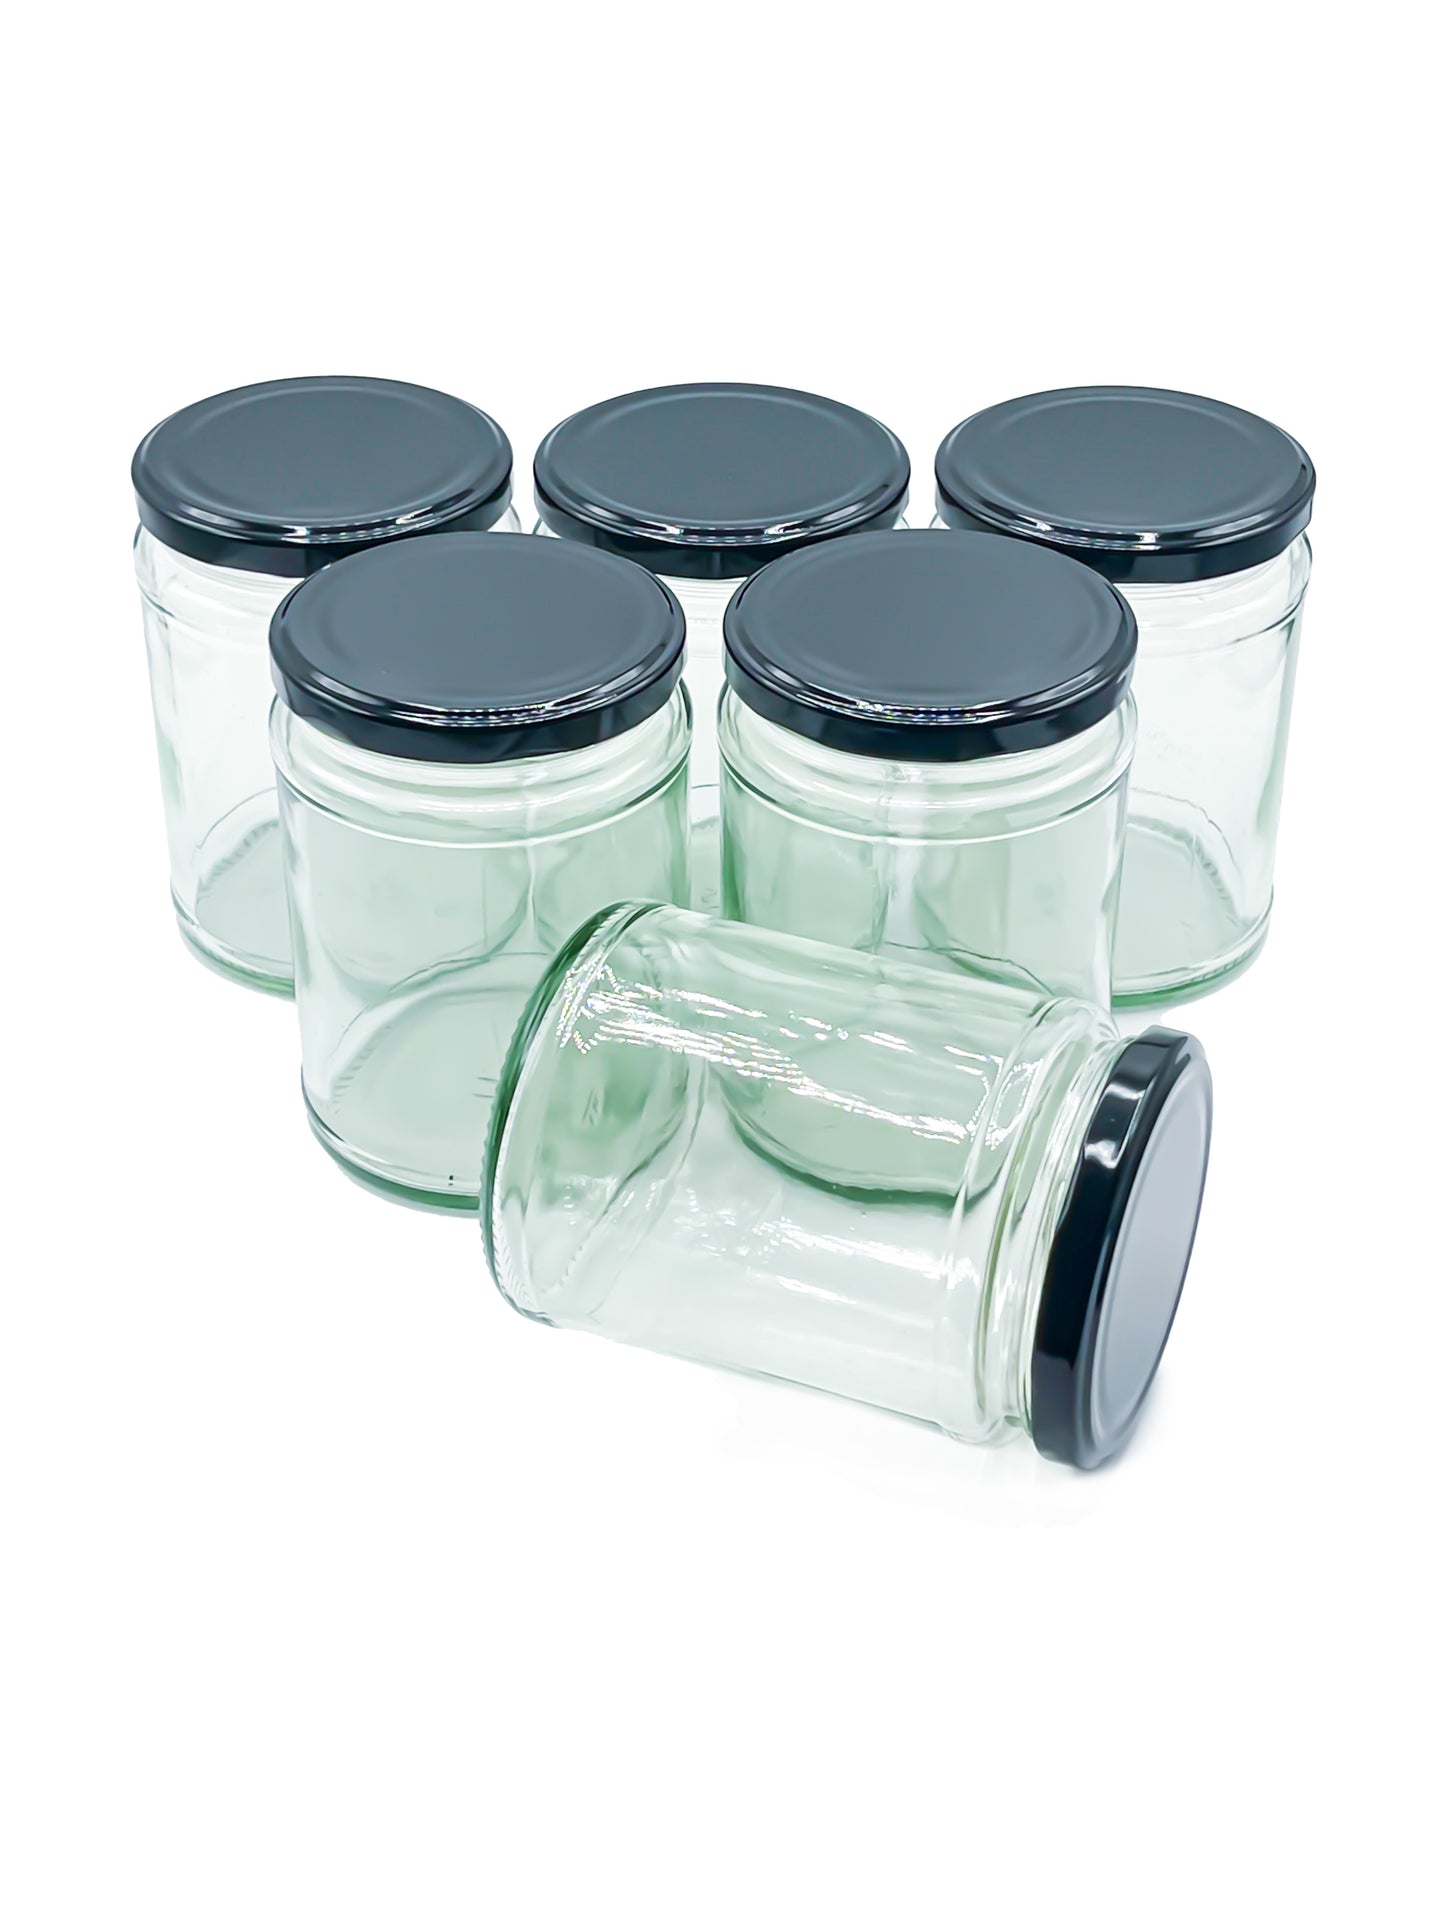 500ml Glass Jars Preserving Food Jars with Twist off Locking Black Lids - 12 Pack